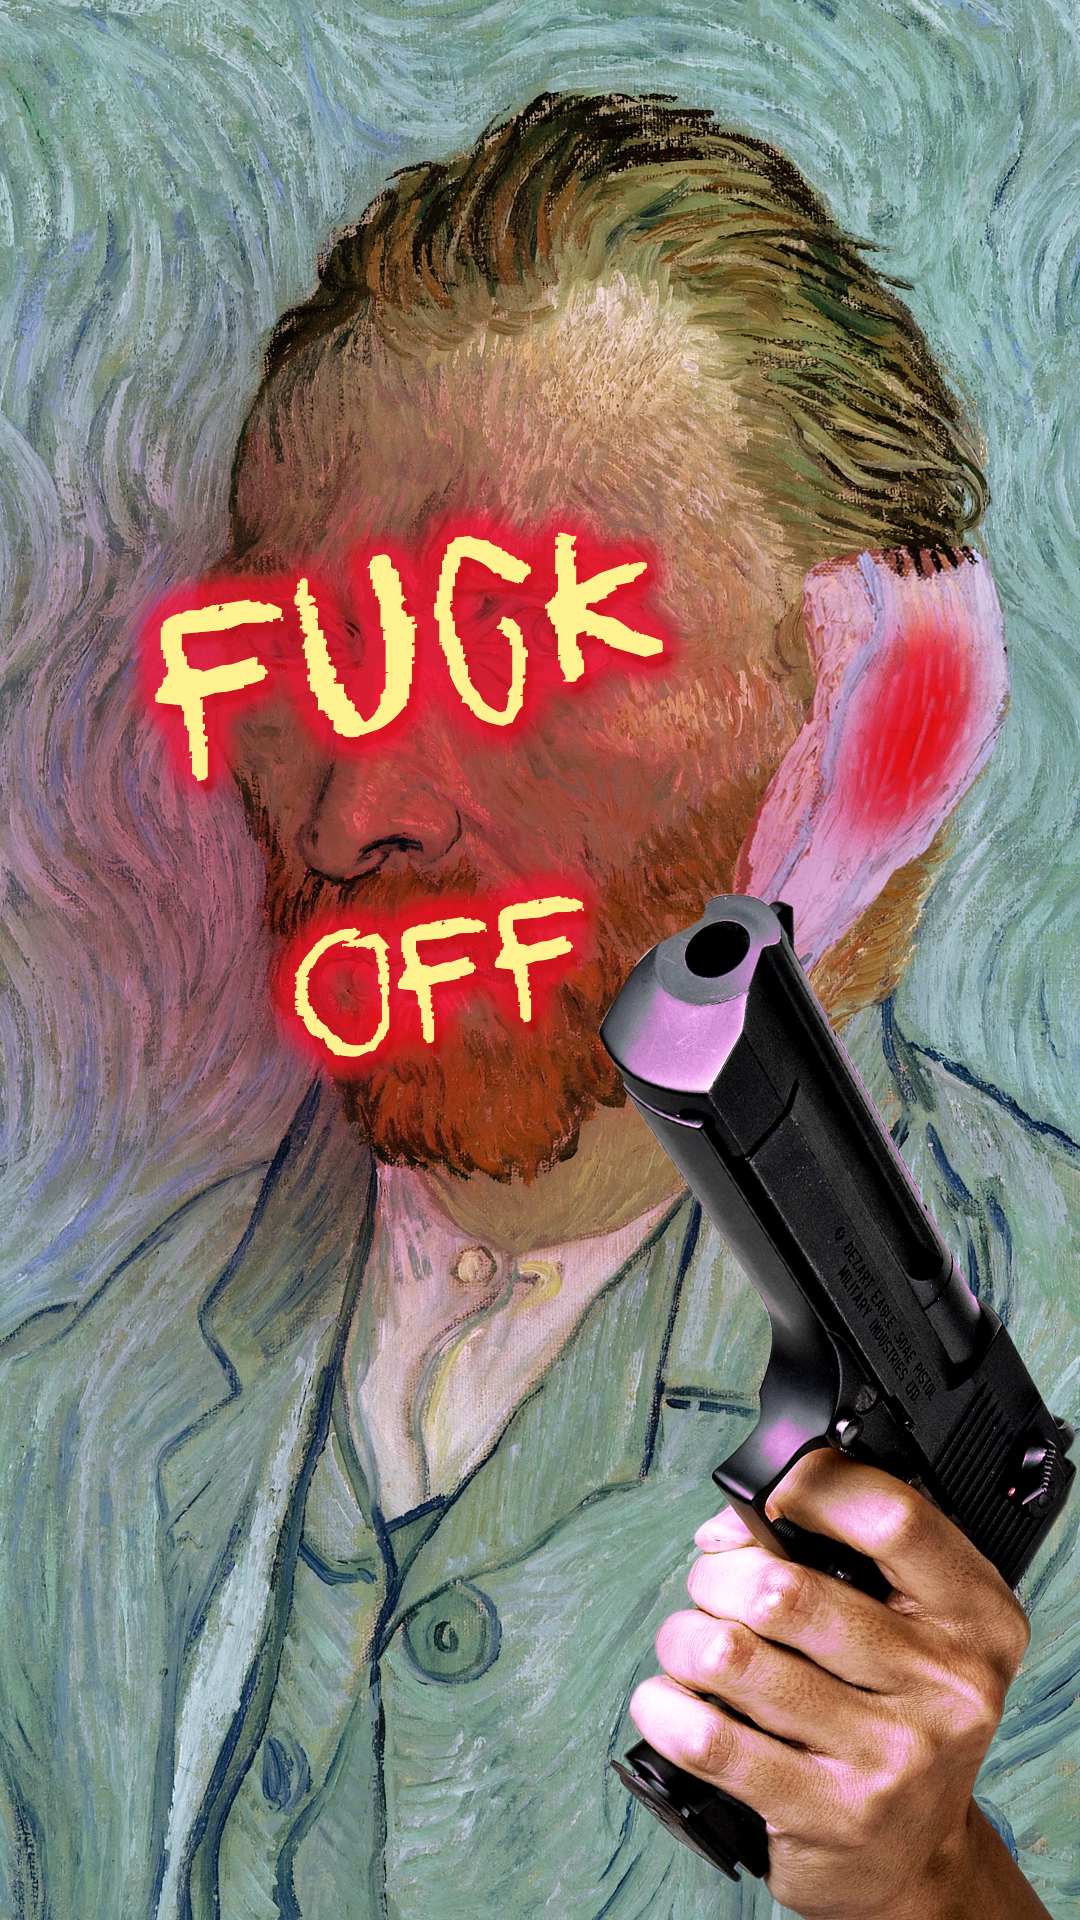 Van Gogh - Fuck off